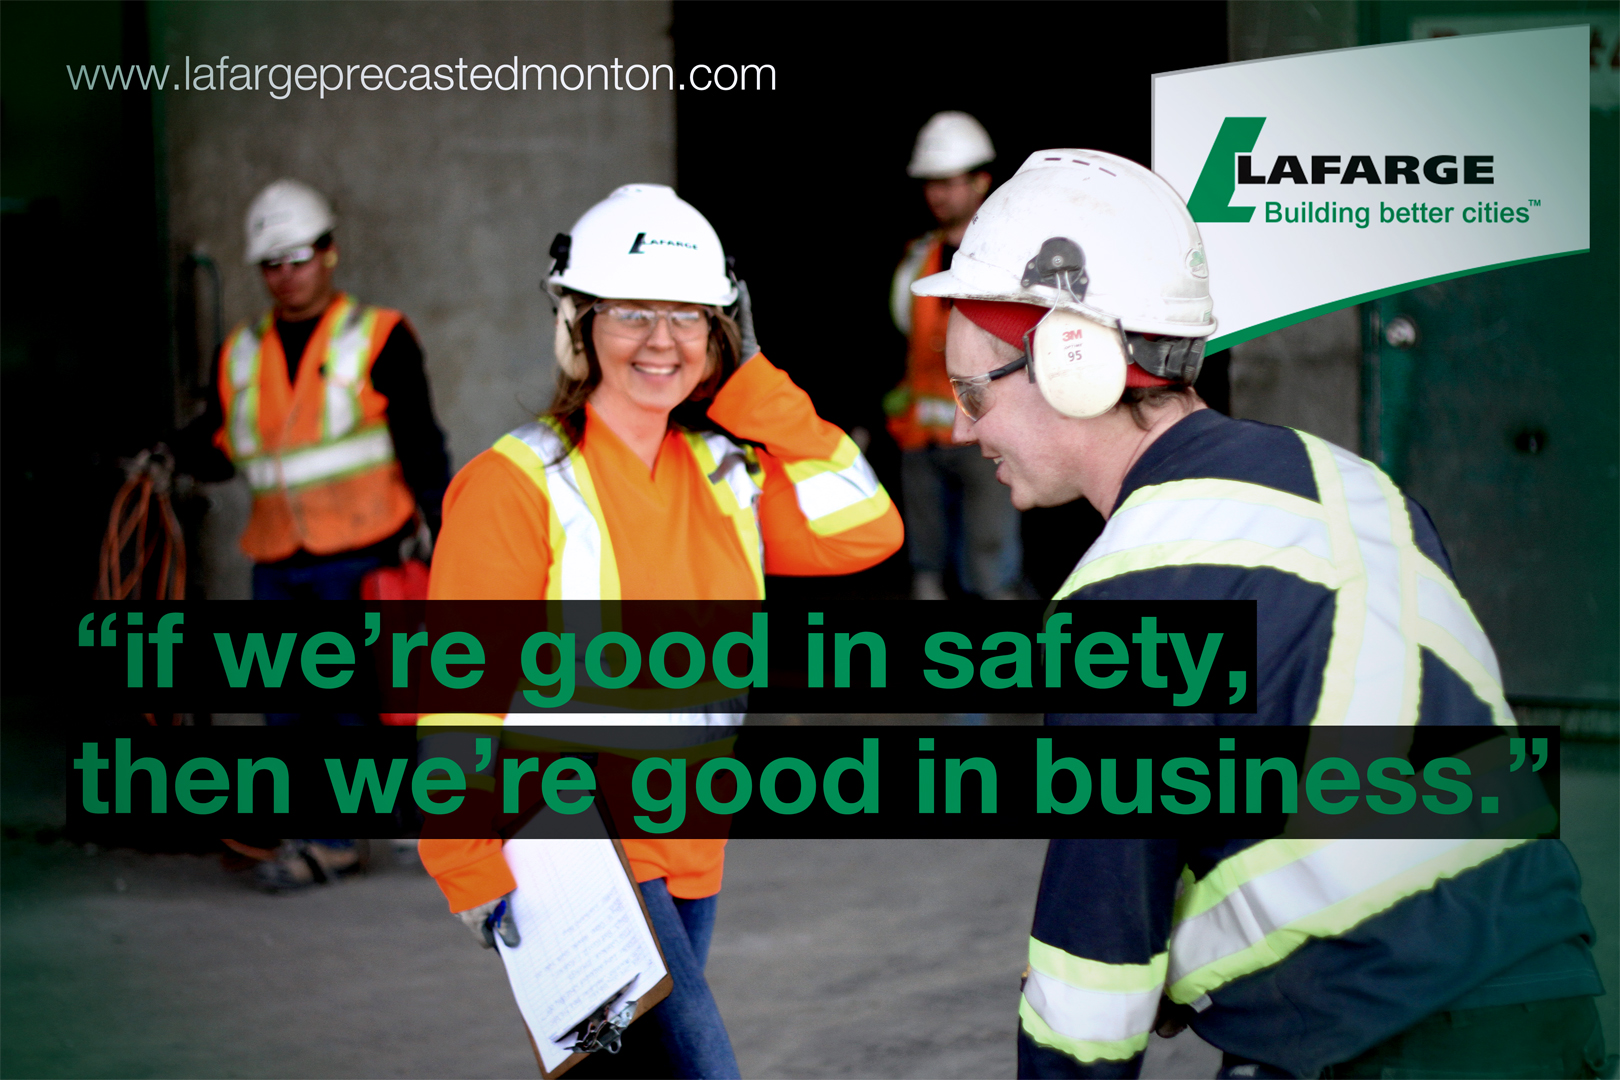 Architectural Precast Cement Concrete Panel Quality Control Lafarge Precast Edmonton Zero Harm Safety Health